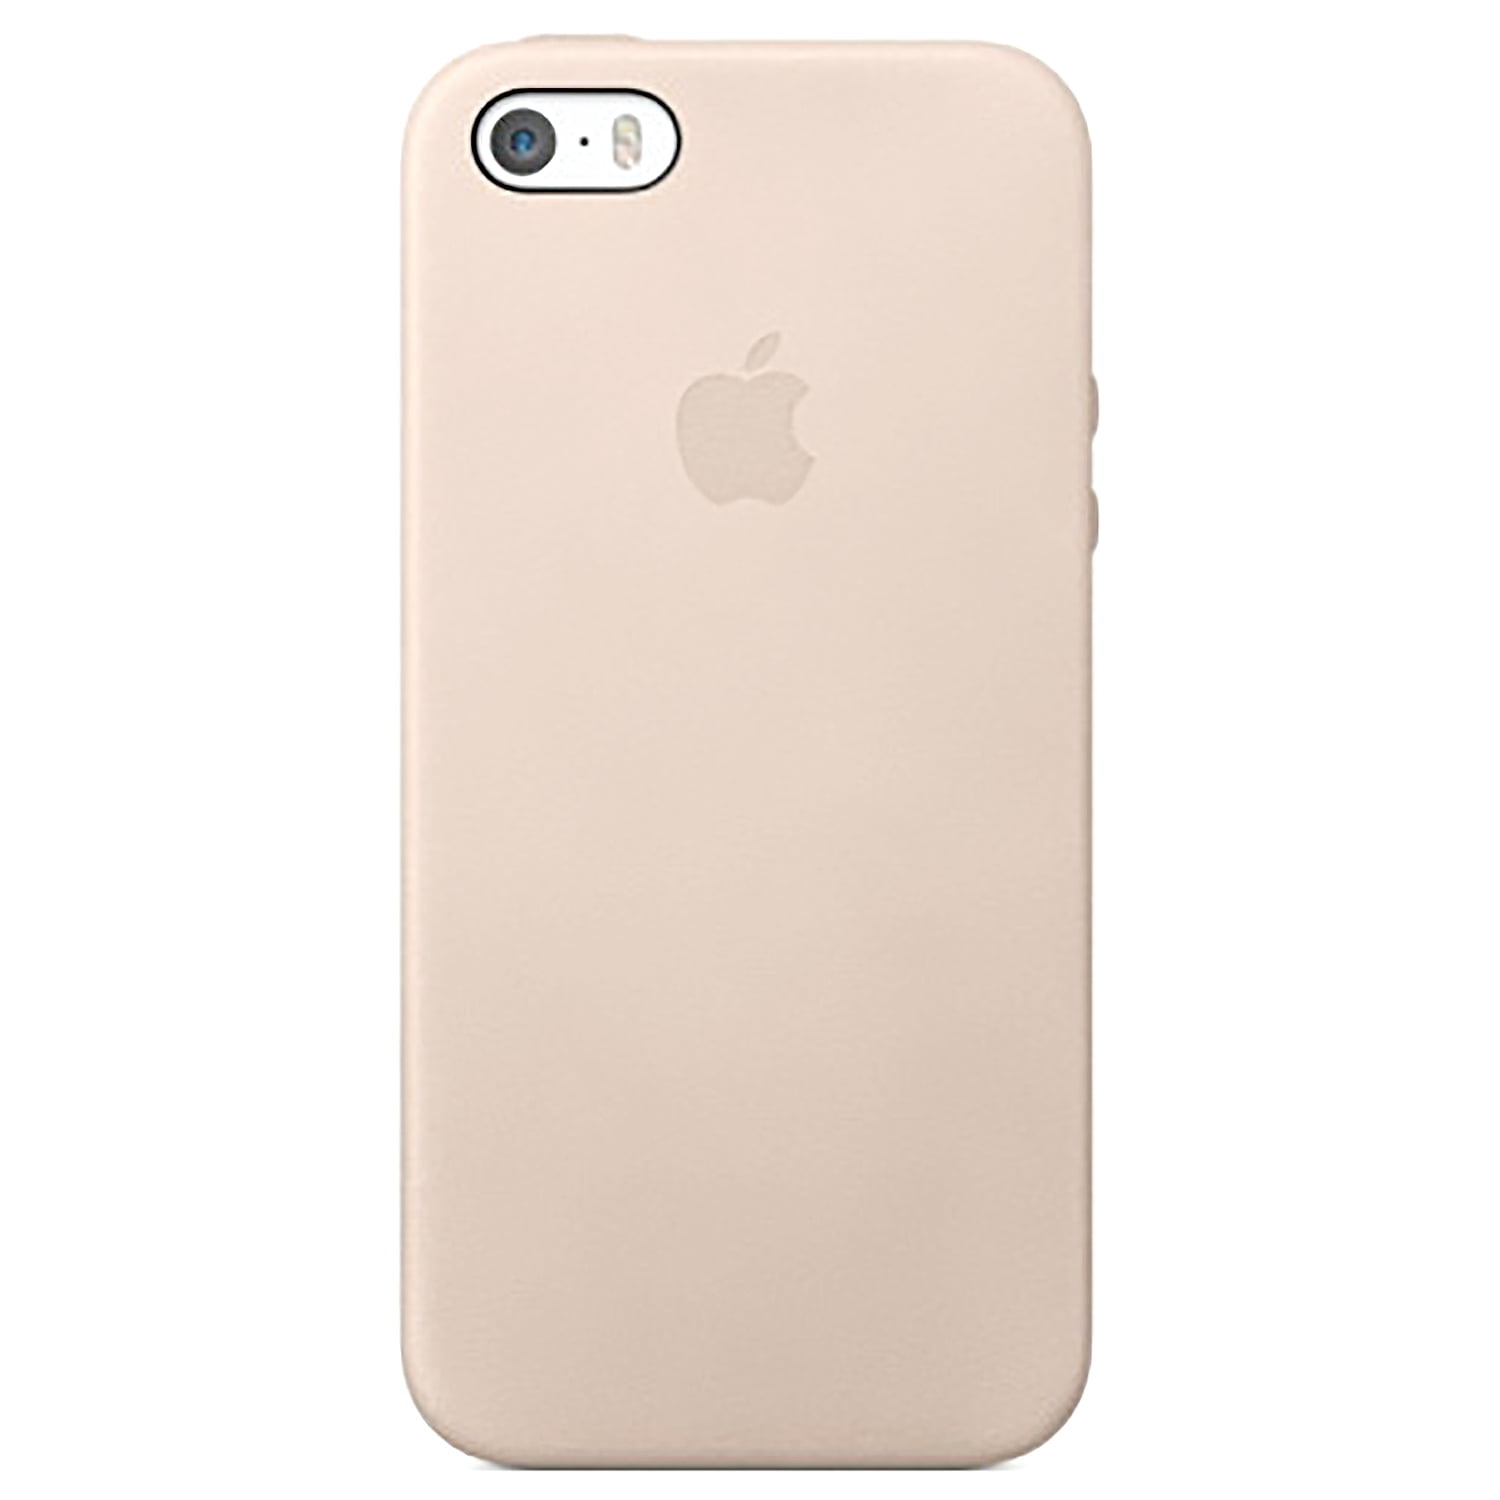 Official Apple Leather Case For Iphone 5 5s Se Beige Walmart Com